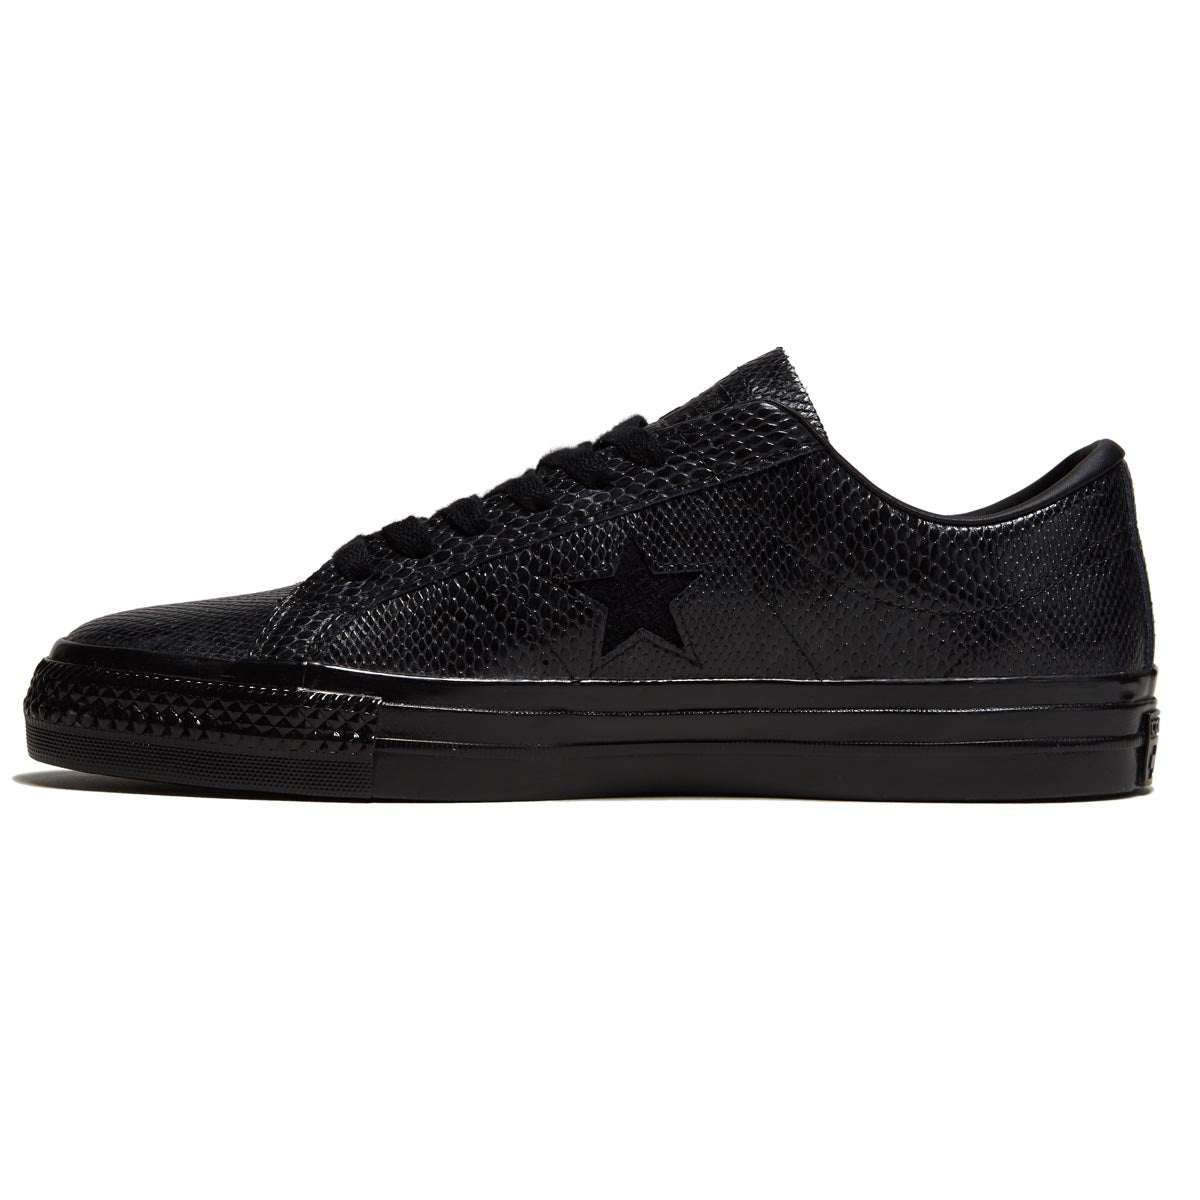 Converse One Star Pro Ox Shoes - Black/Black/Black/White image 2